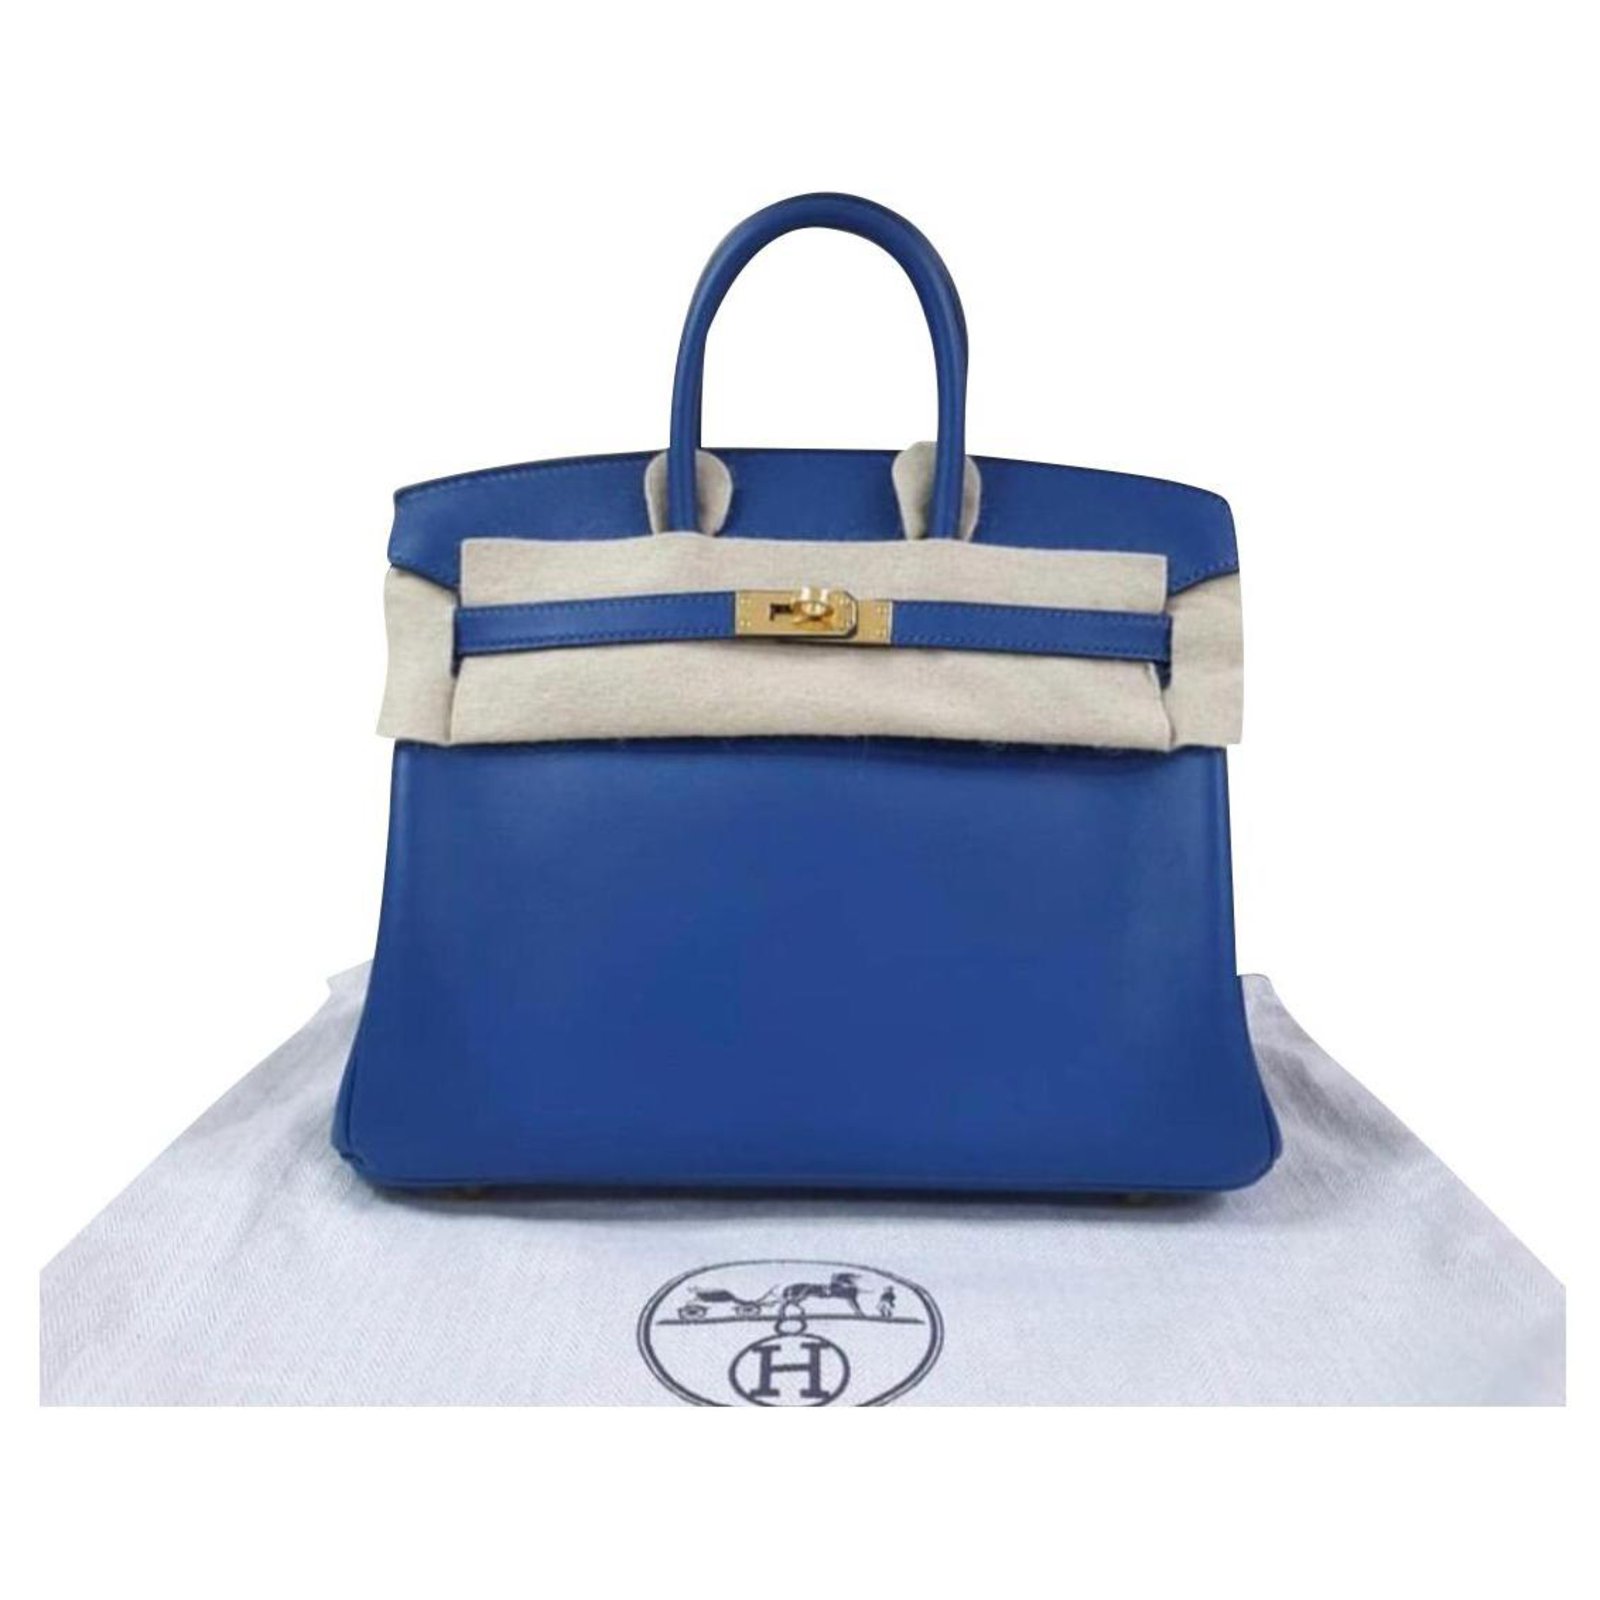 Hermes Blue Handbags